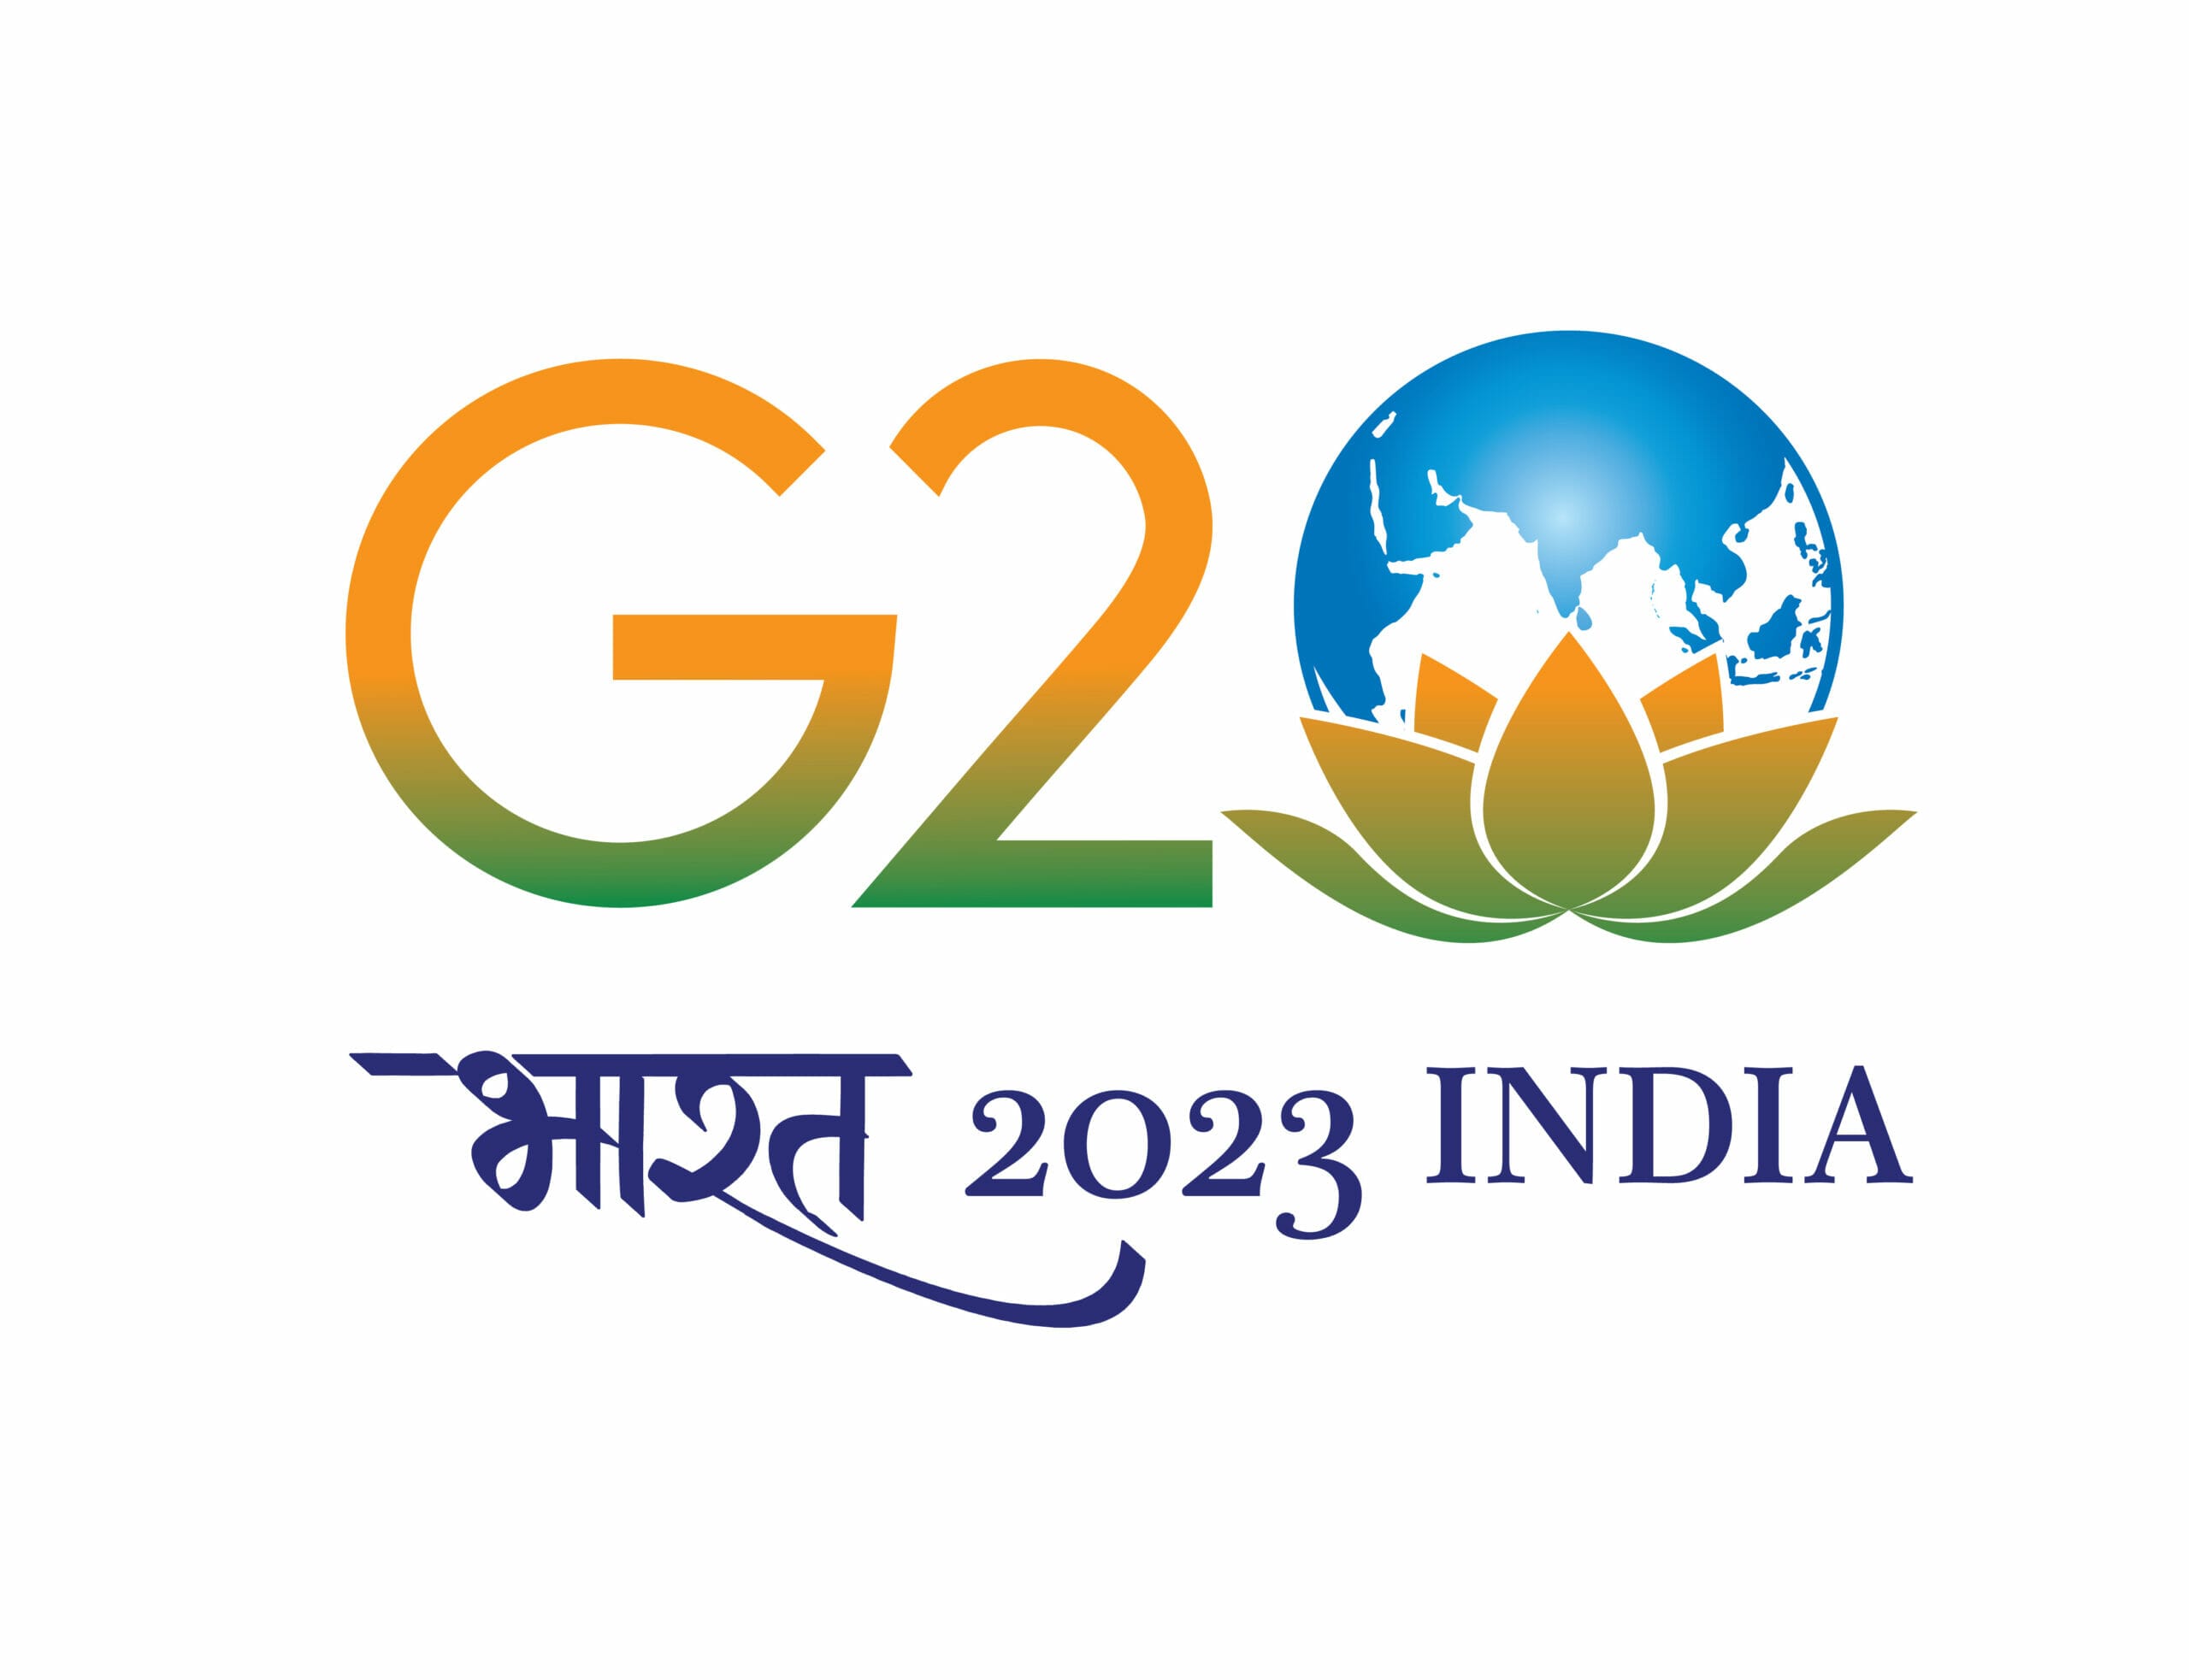 G20 2023 Logo